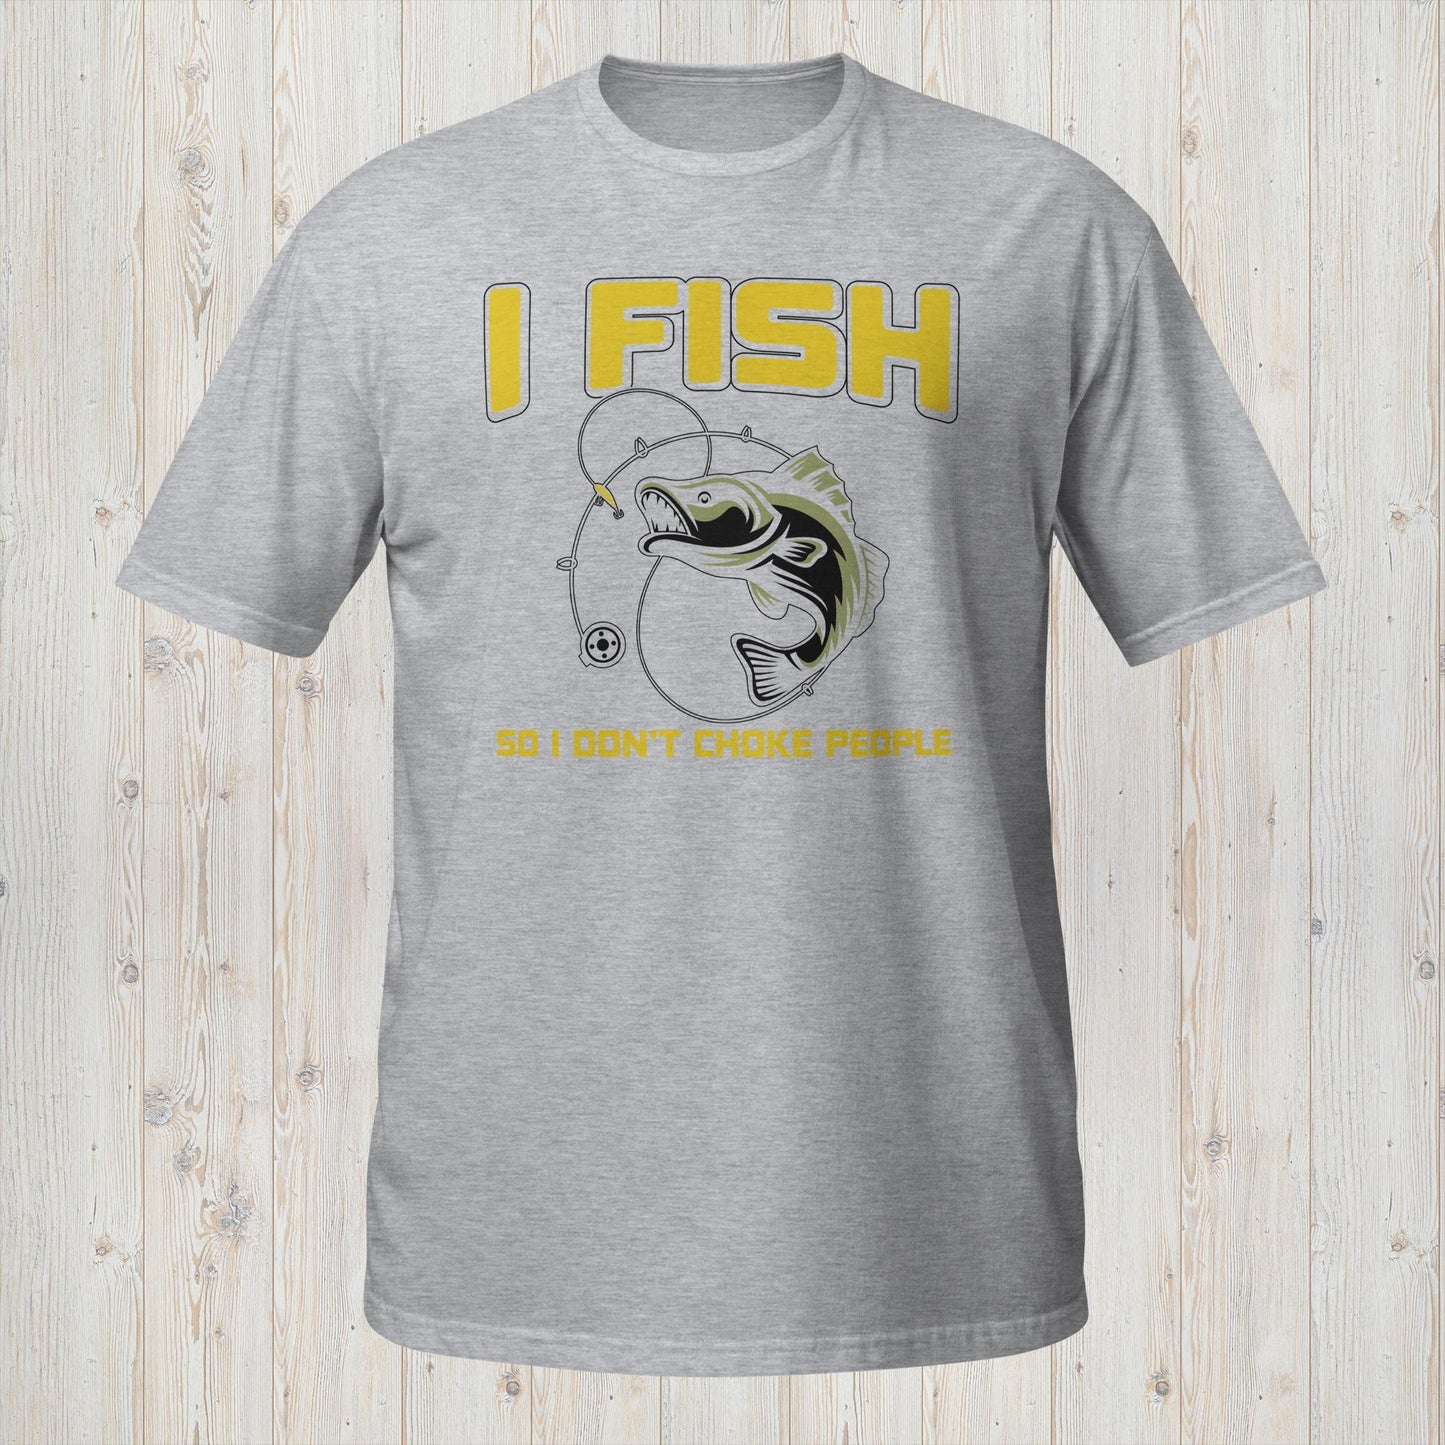 I Fish So I Don't Choke People Tee - Humorous Fishing Statement T-Shirt